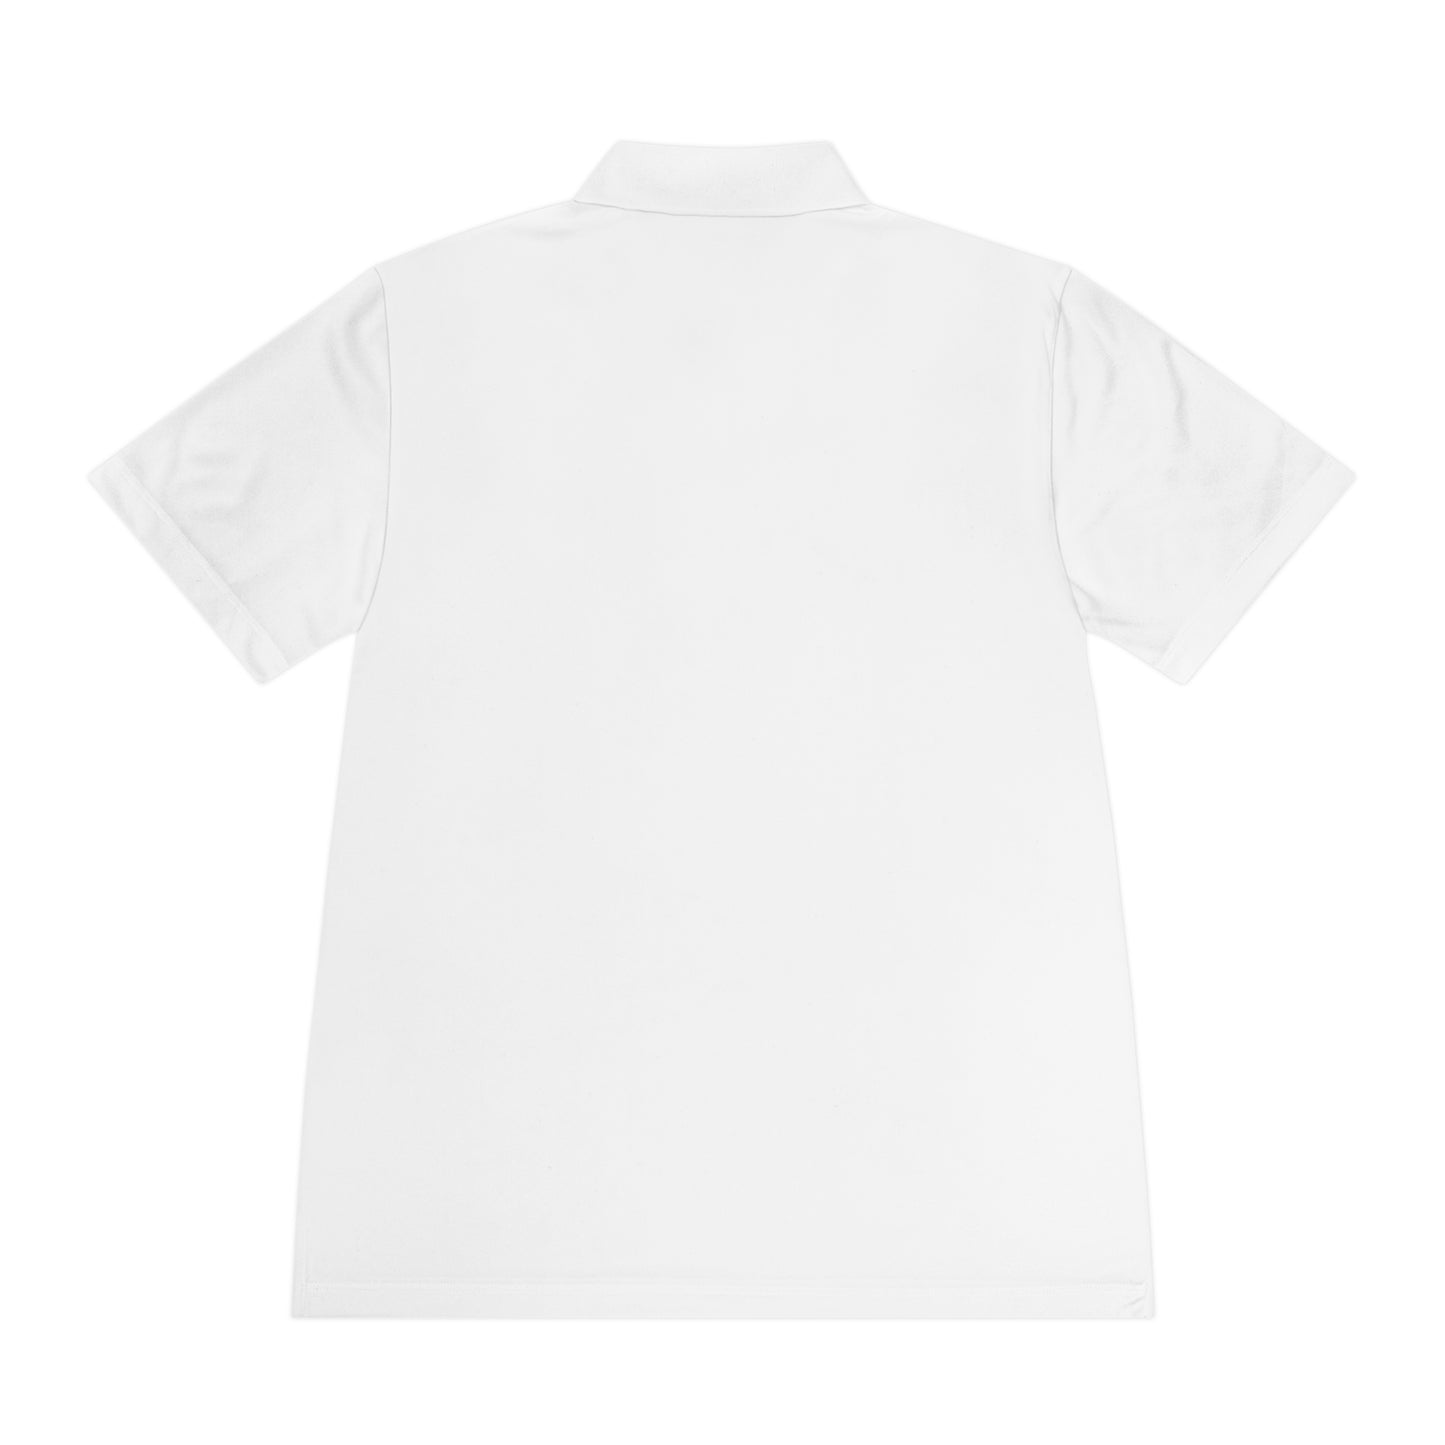 Chelsea FC Men's Sport Polo Shirt